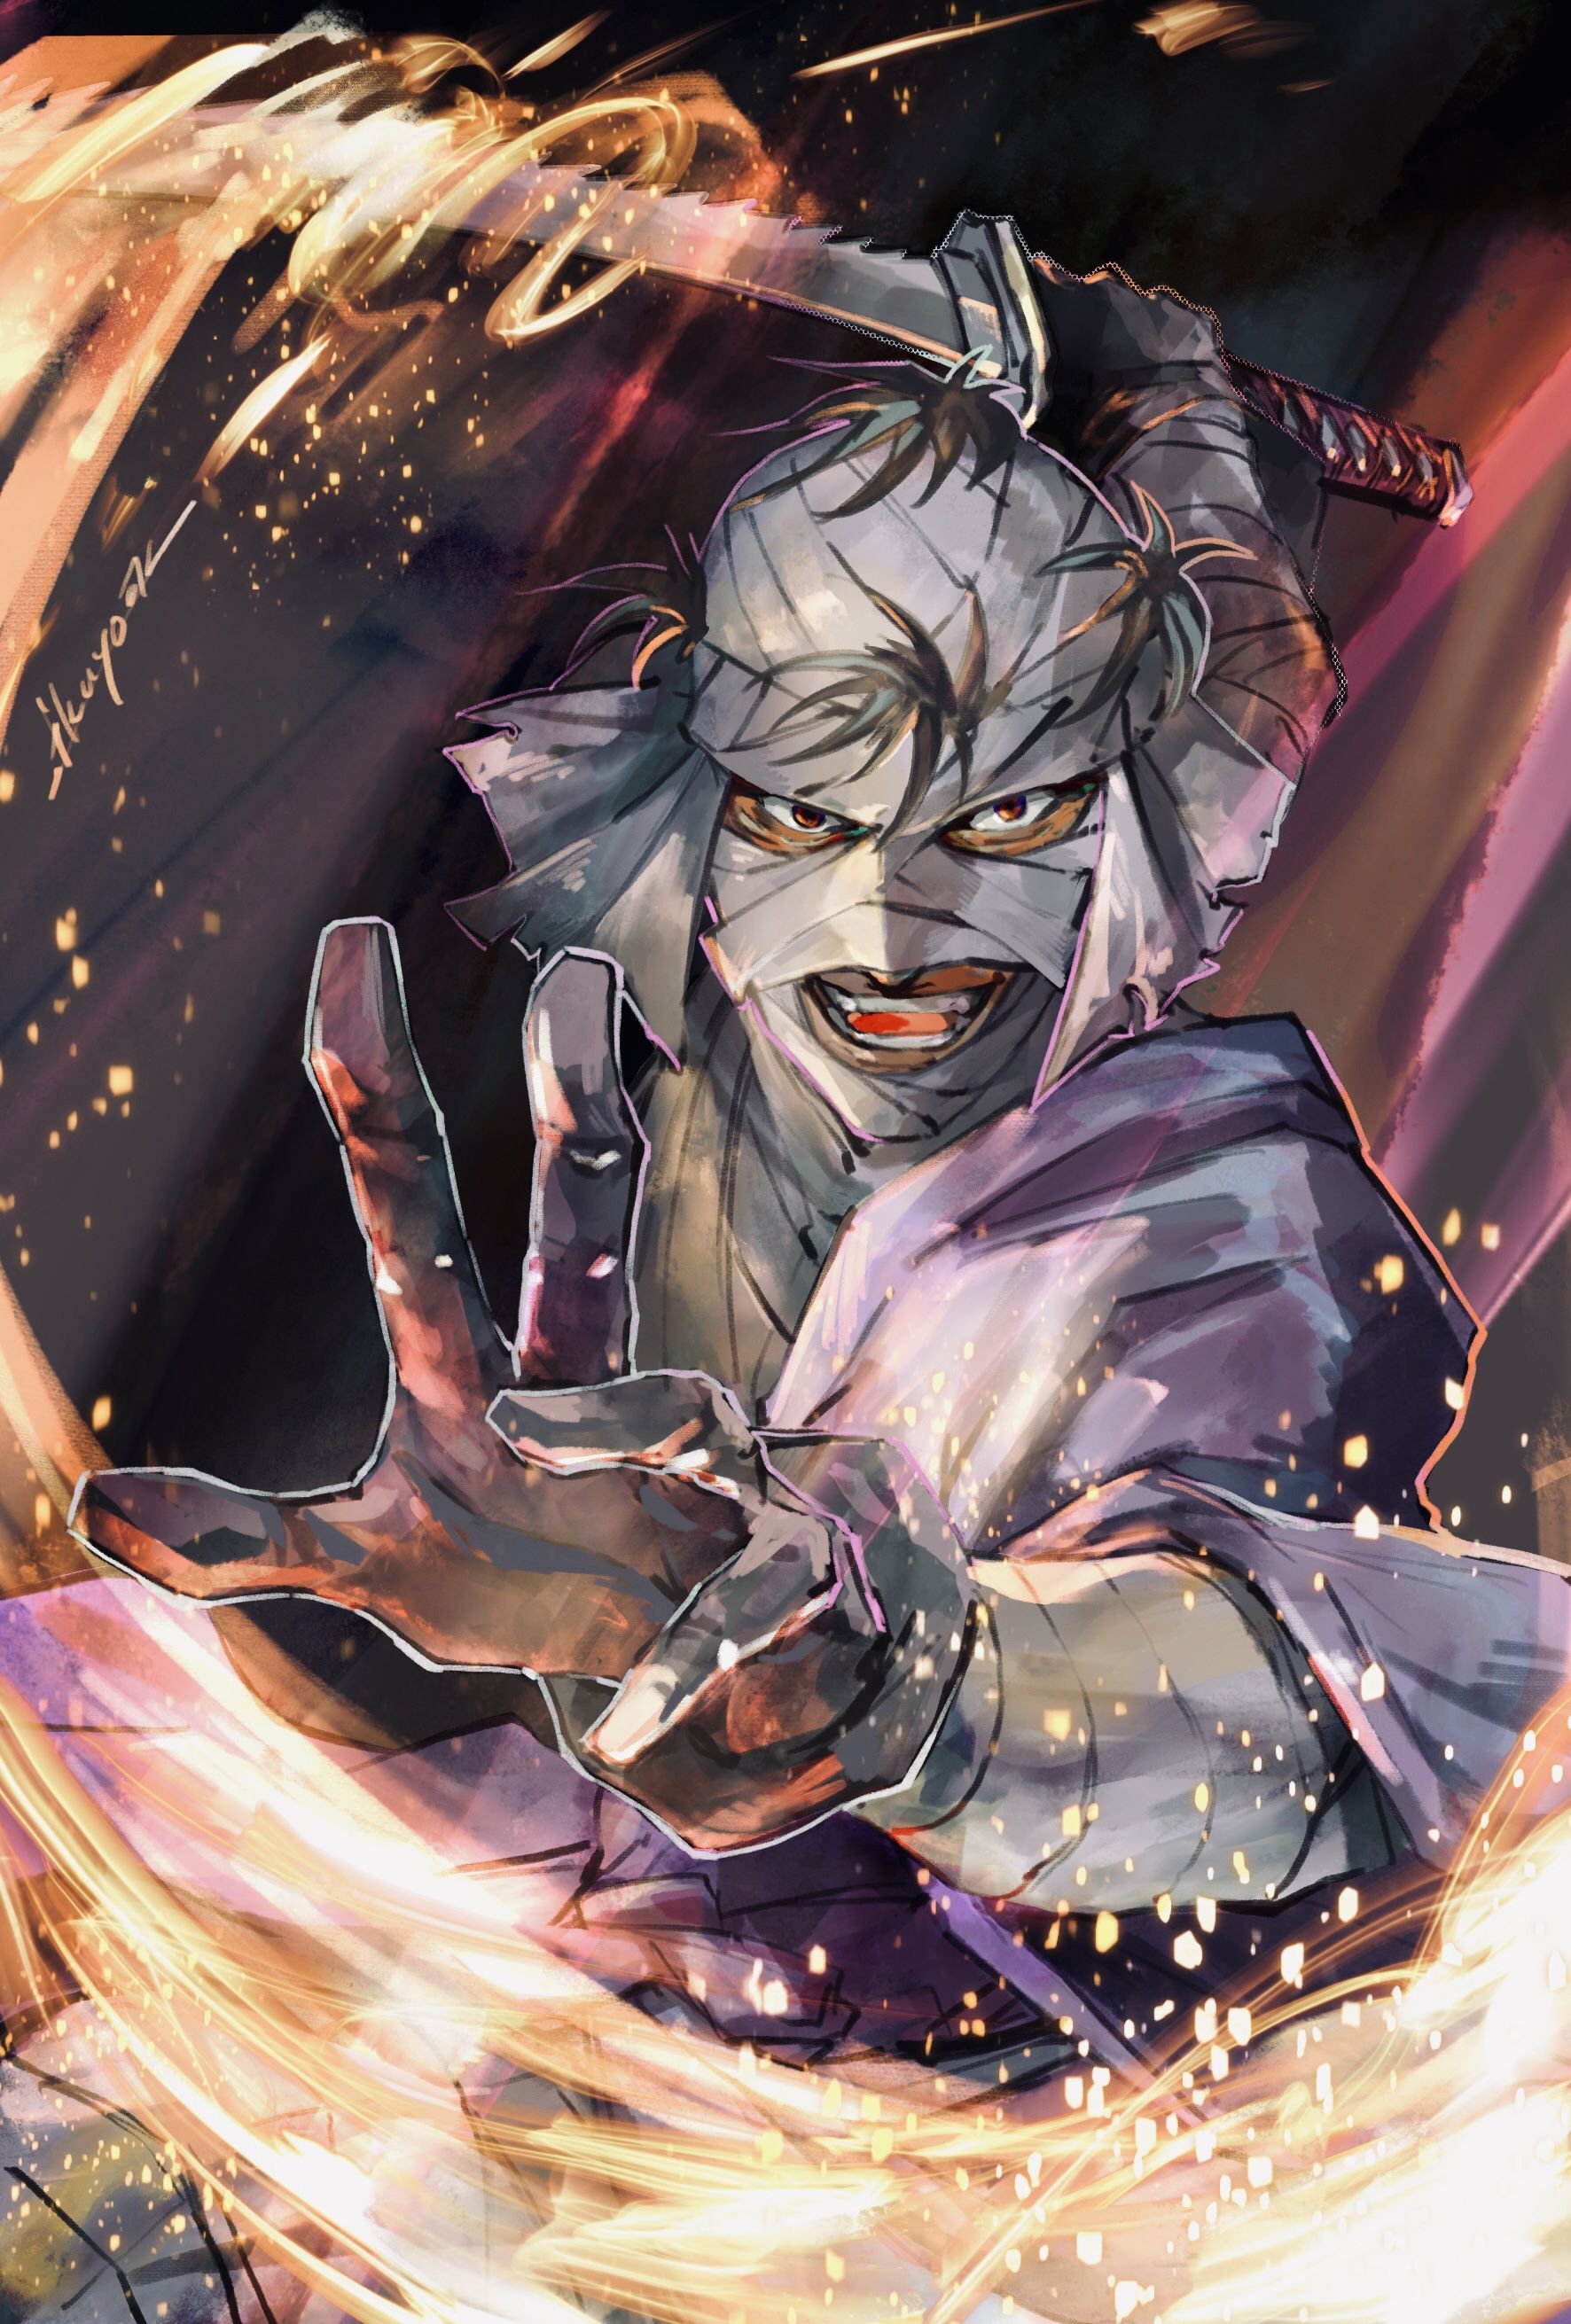 Makoto Shishio fire swordsman from Rurouni Kenshin 4K wallpaper download